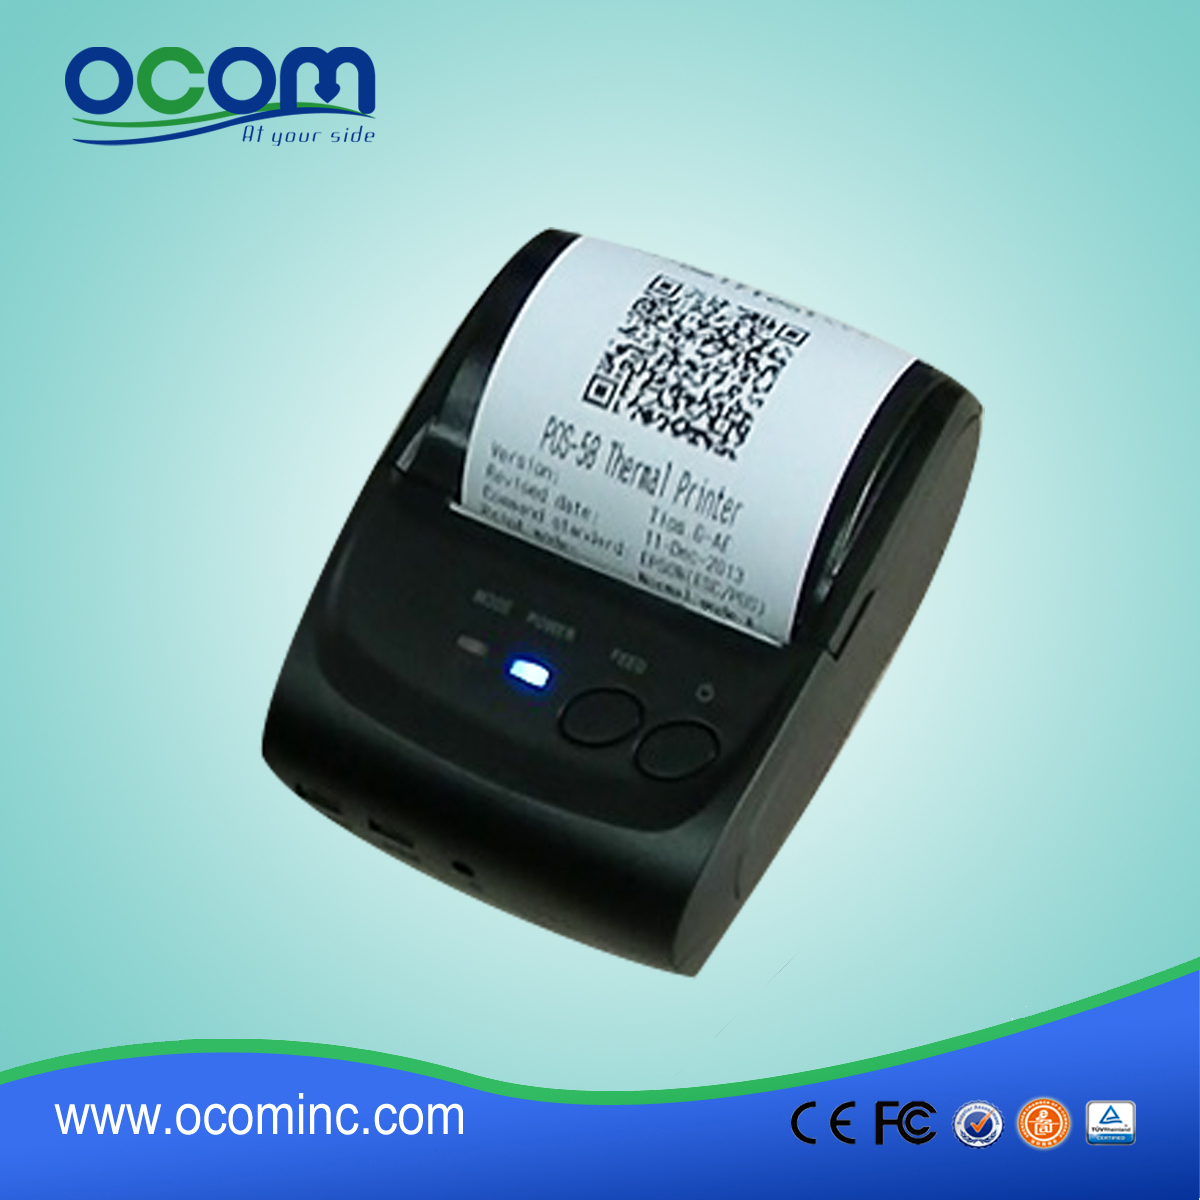 Nieuwe mobiele Bluetooth thermische printer OCPP- M05